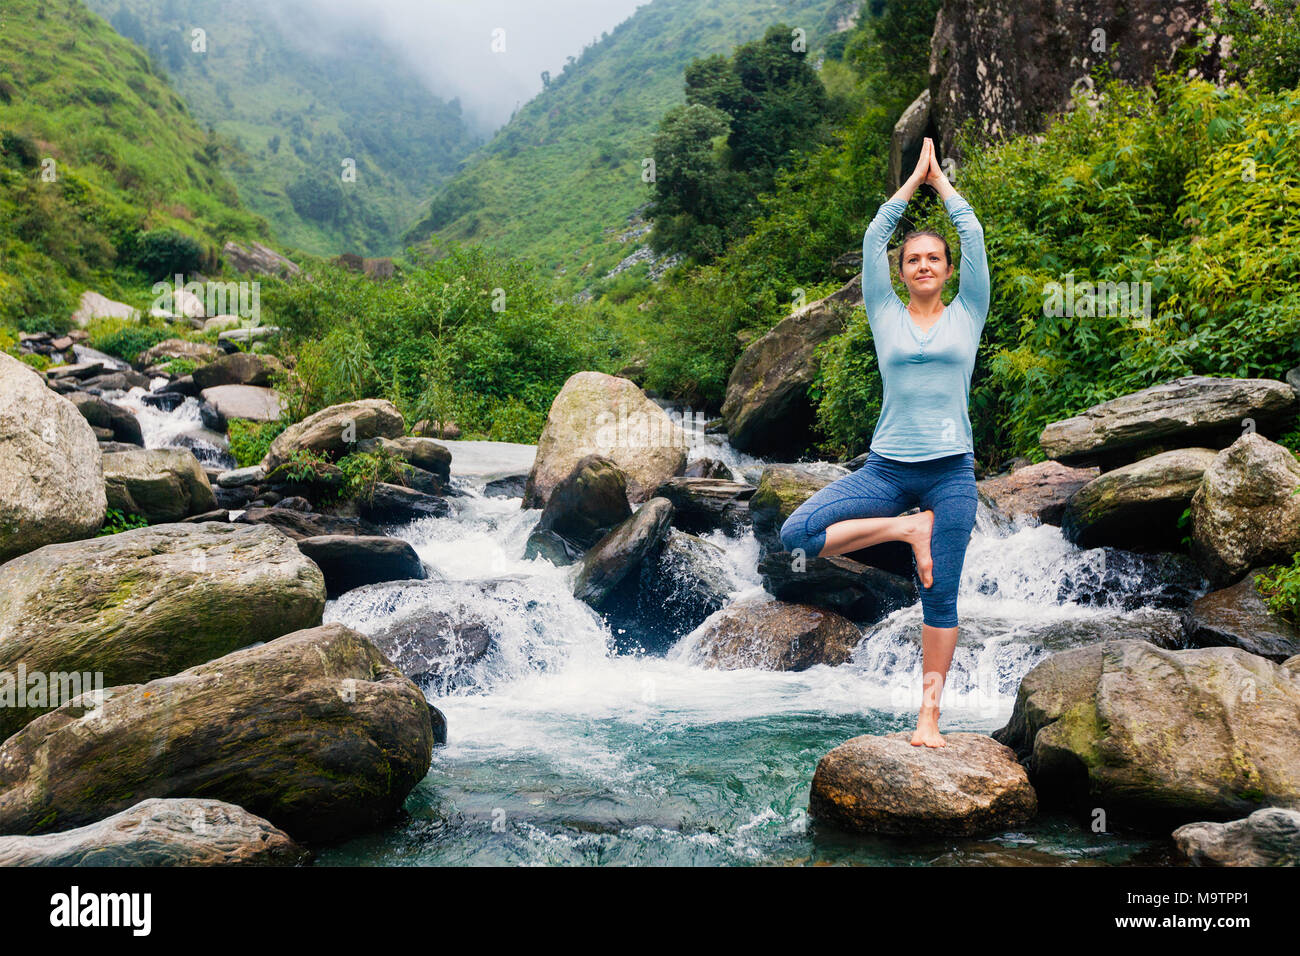 Woman in yoga asana Vrikshasana posture de l'arbre à cascade en plein air Banque D'Images